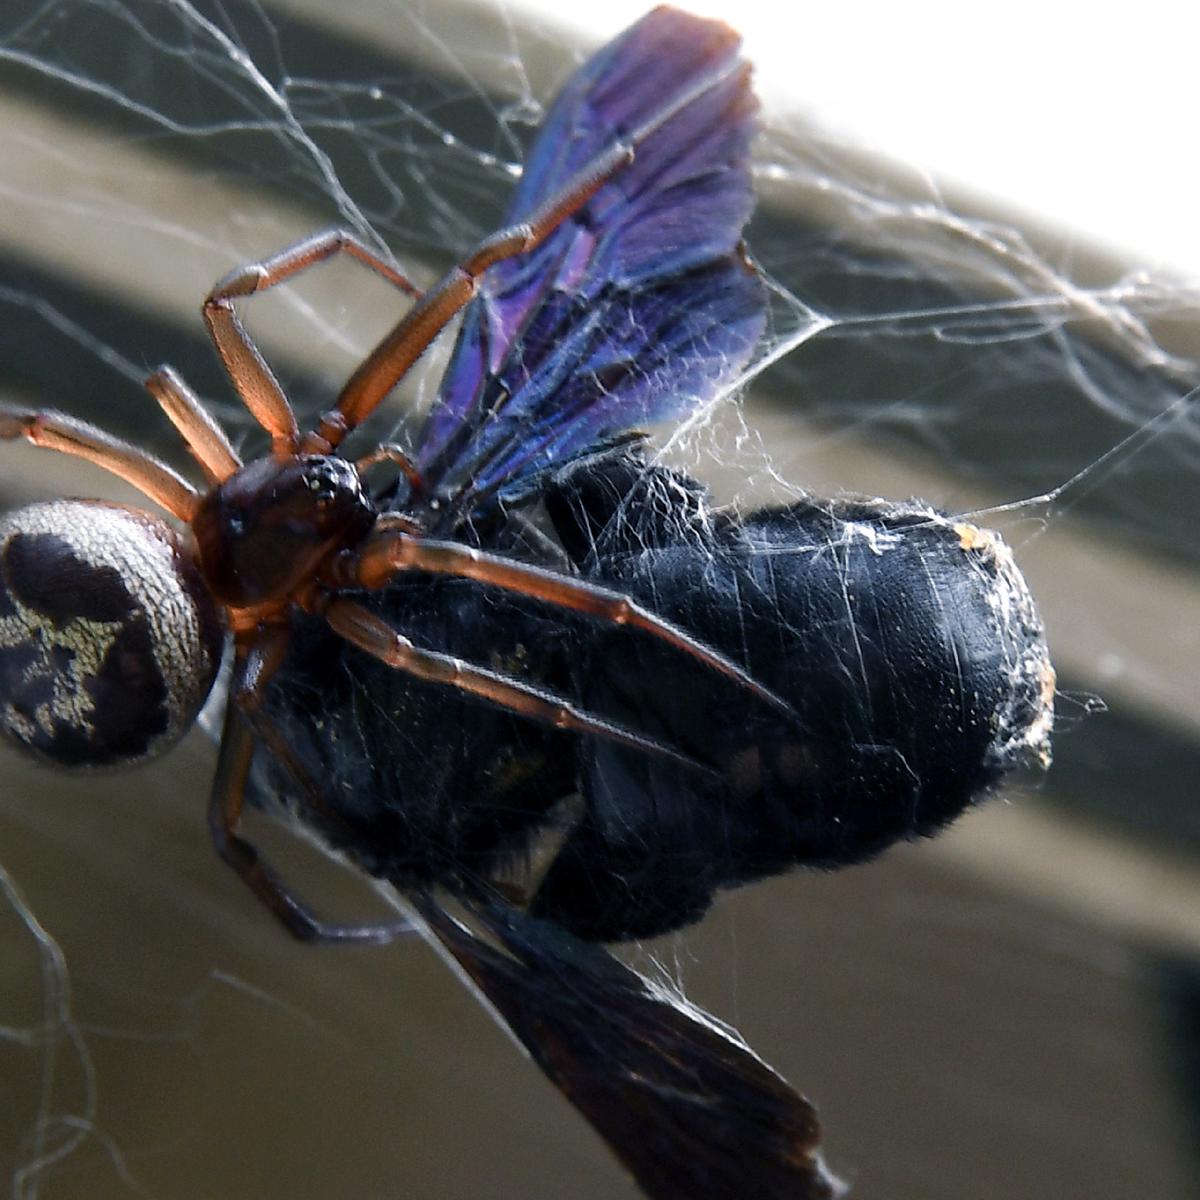 Tuliskan tiga hewan vertebrata yang memiliki alat gerak yang sama seperti a kupu-kupu b laba-laba